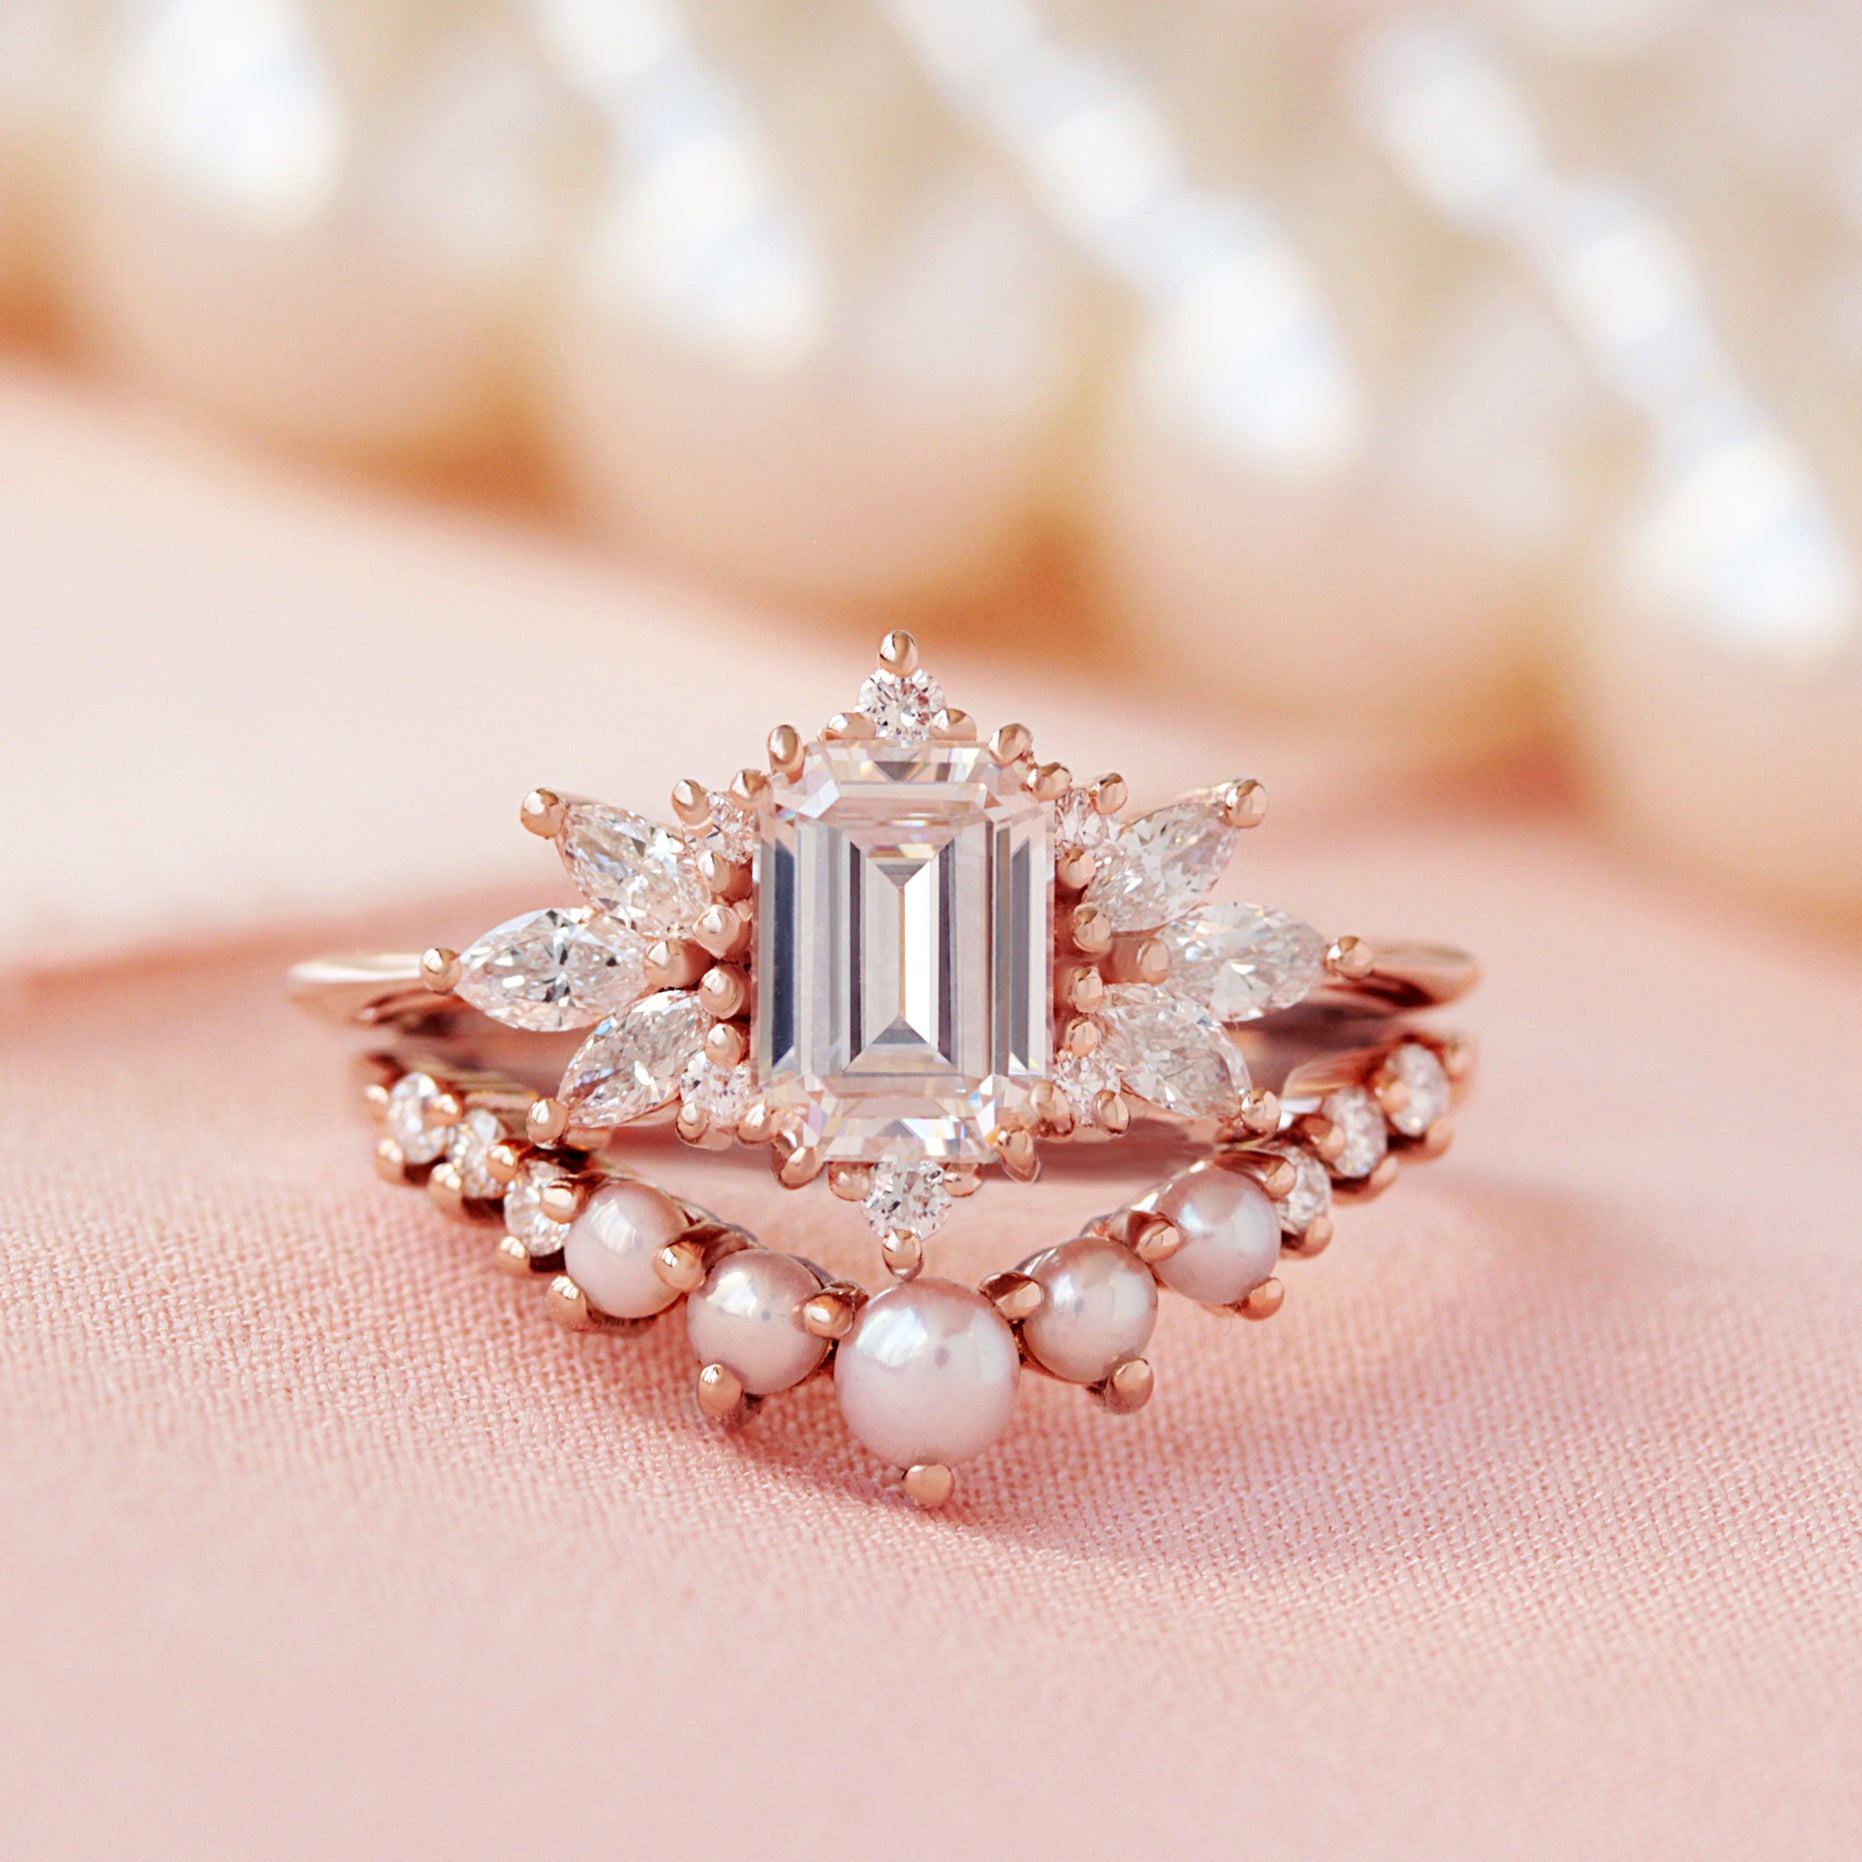 14KW 3-Stone Emerald Cut Halo Diamond Engagement Ring - WR7775/96556